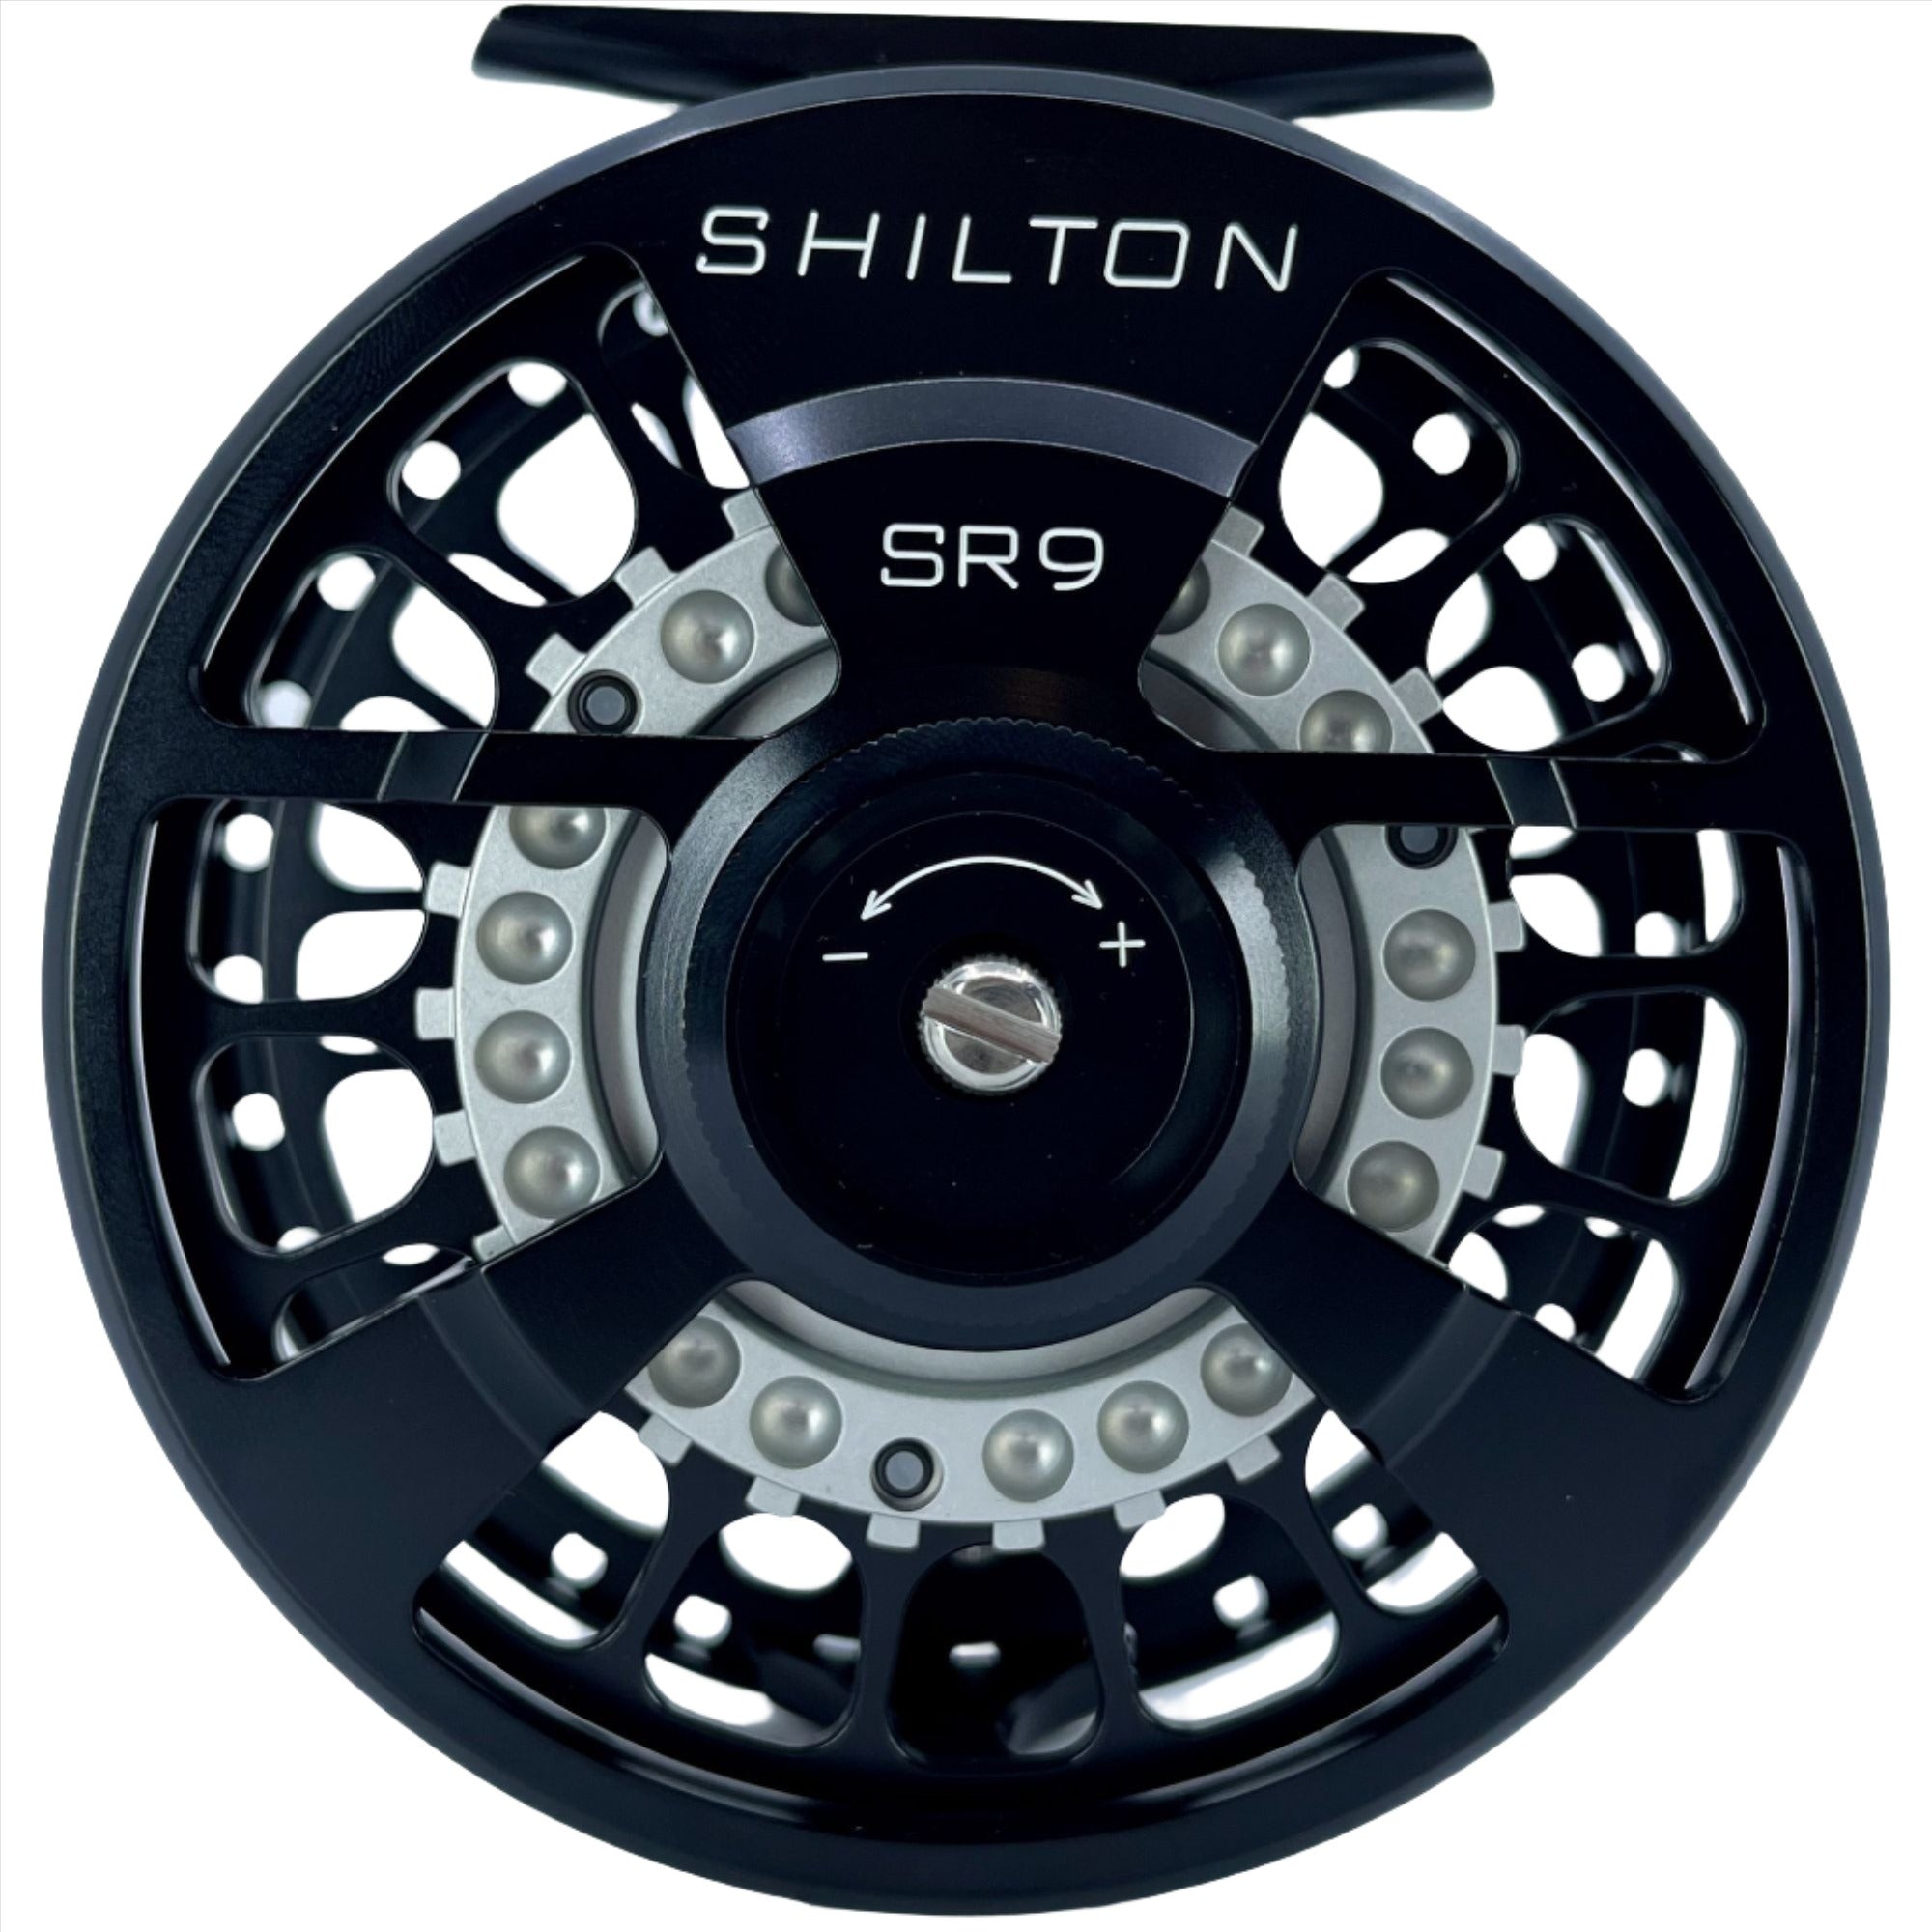 Shilton SR 9 - Black (IN STOCK) - 239 Flies